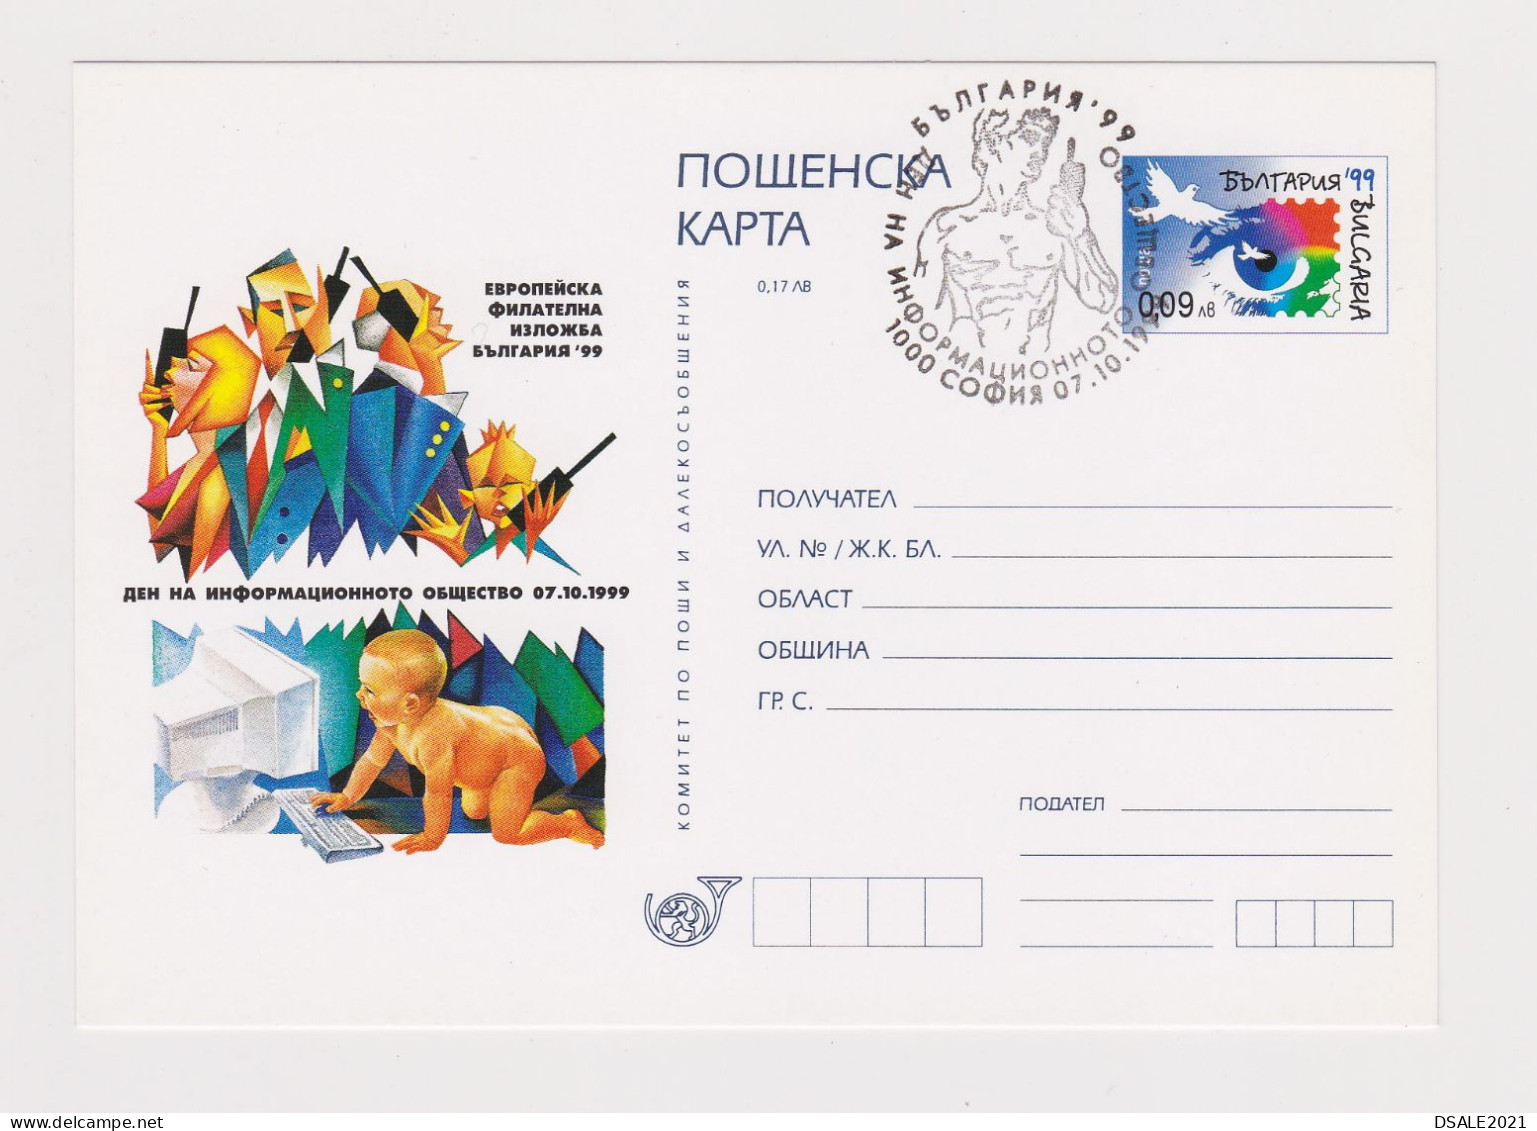 Bulgaria Bulgarien Bulgarie 1999 Postal Stationery Card PSC - EUROPEAN PHILATELIC EXIBITION 1999 Special Cachet (37550) - Cartes Postales